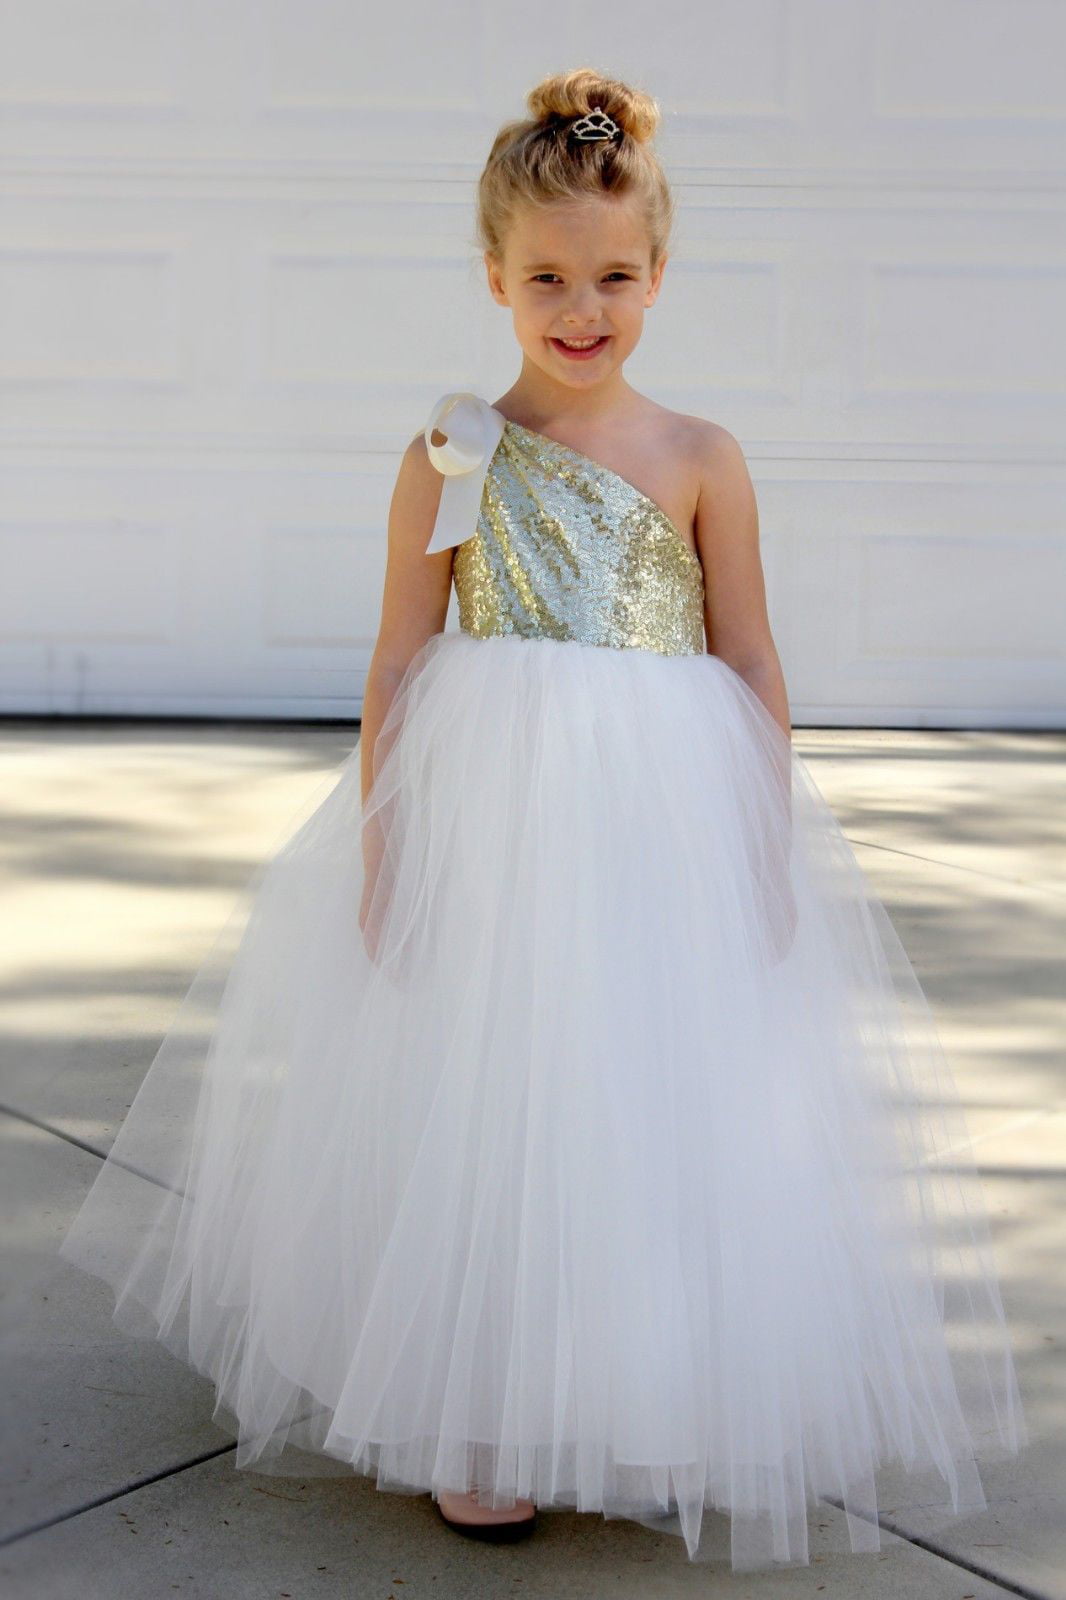 KLFFLGID Baby Girl Tulle One Shoulder Dresses Toddler Bowknot Formal Party Wedding Flower Girl Dress Tutu Gown